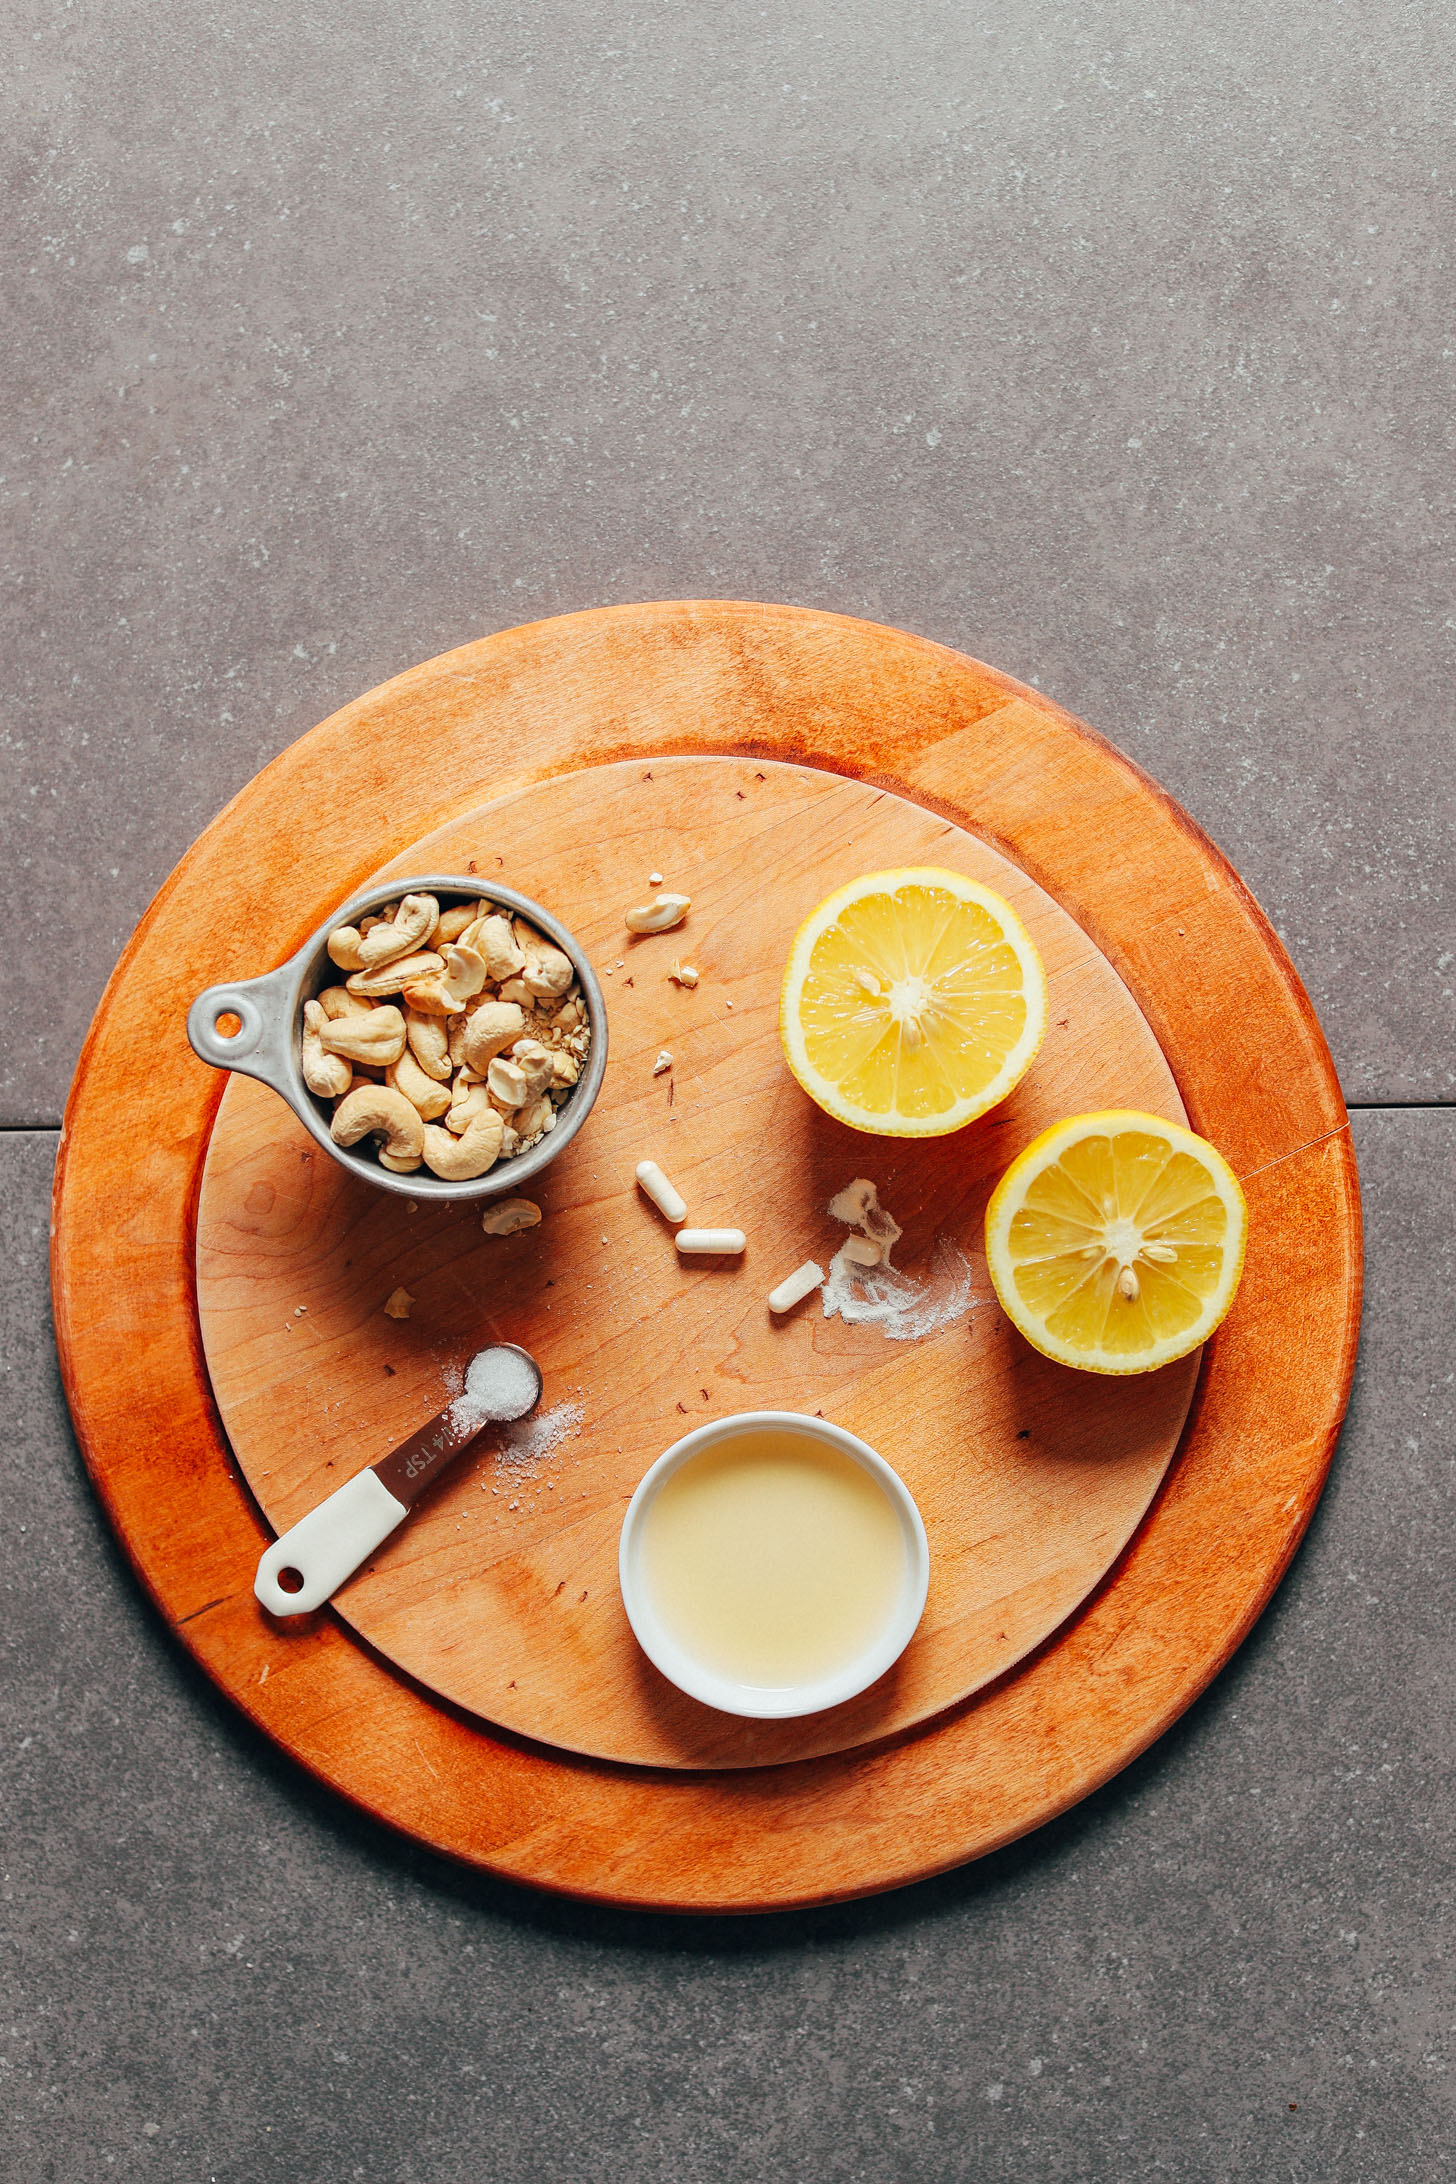 Wood cutting board with cashews, lemon, olive oil, probiotics, and salt for making homemade Vegan Sour Cream